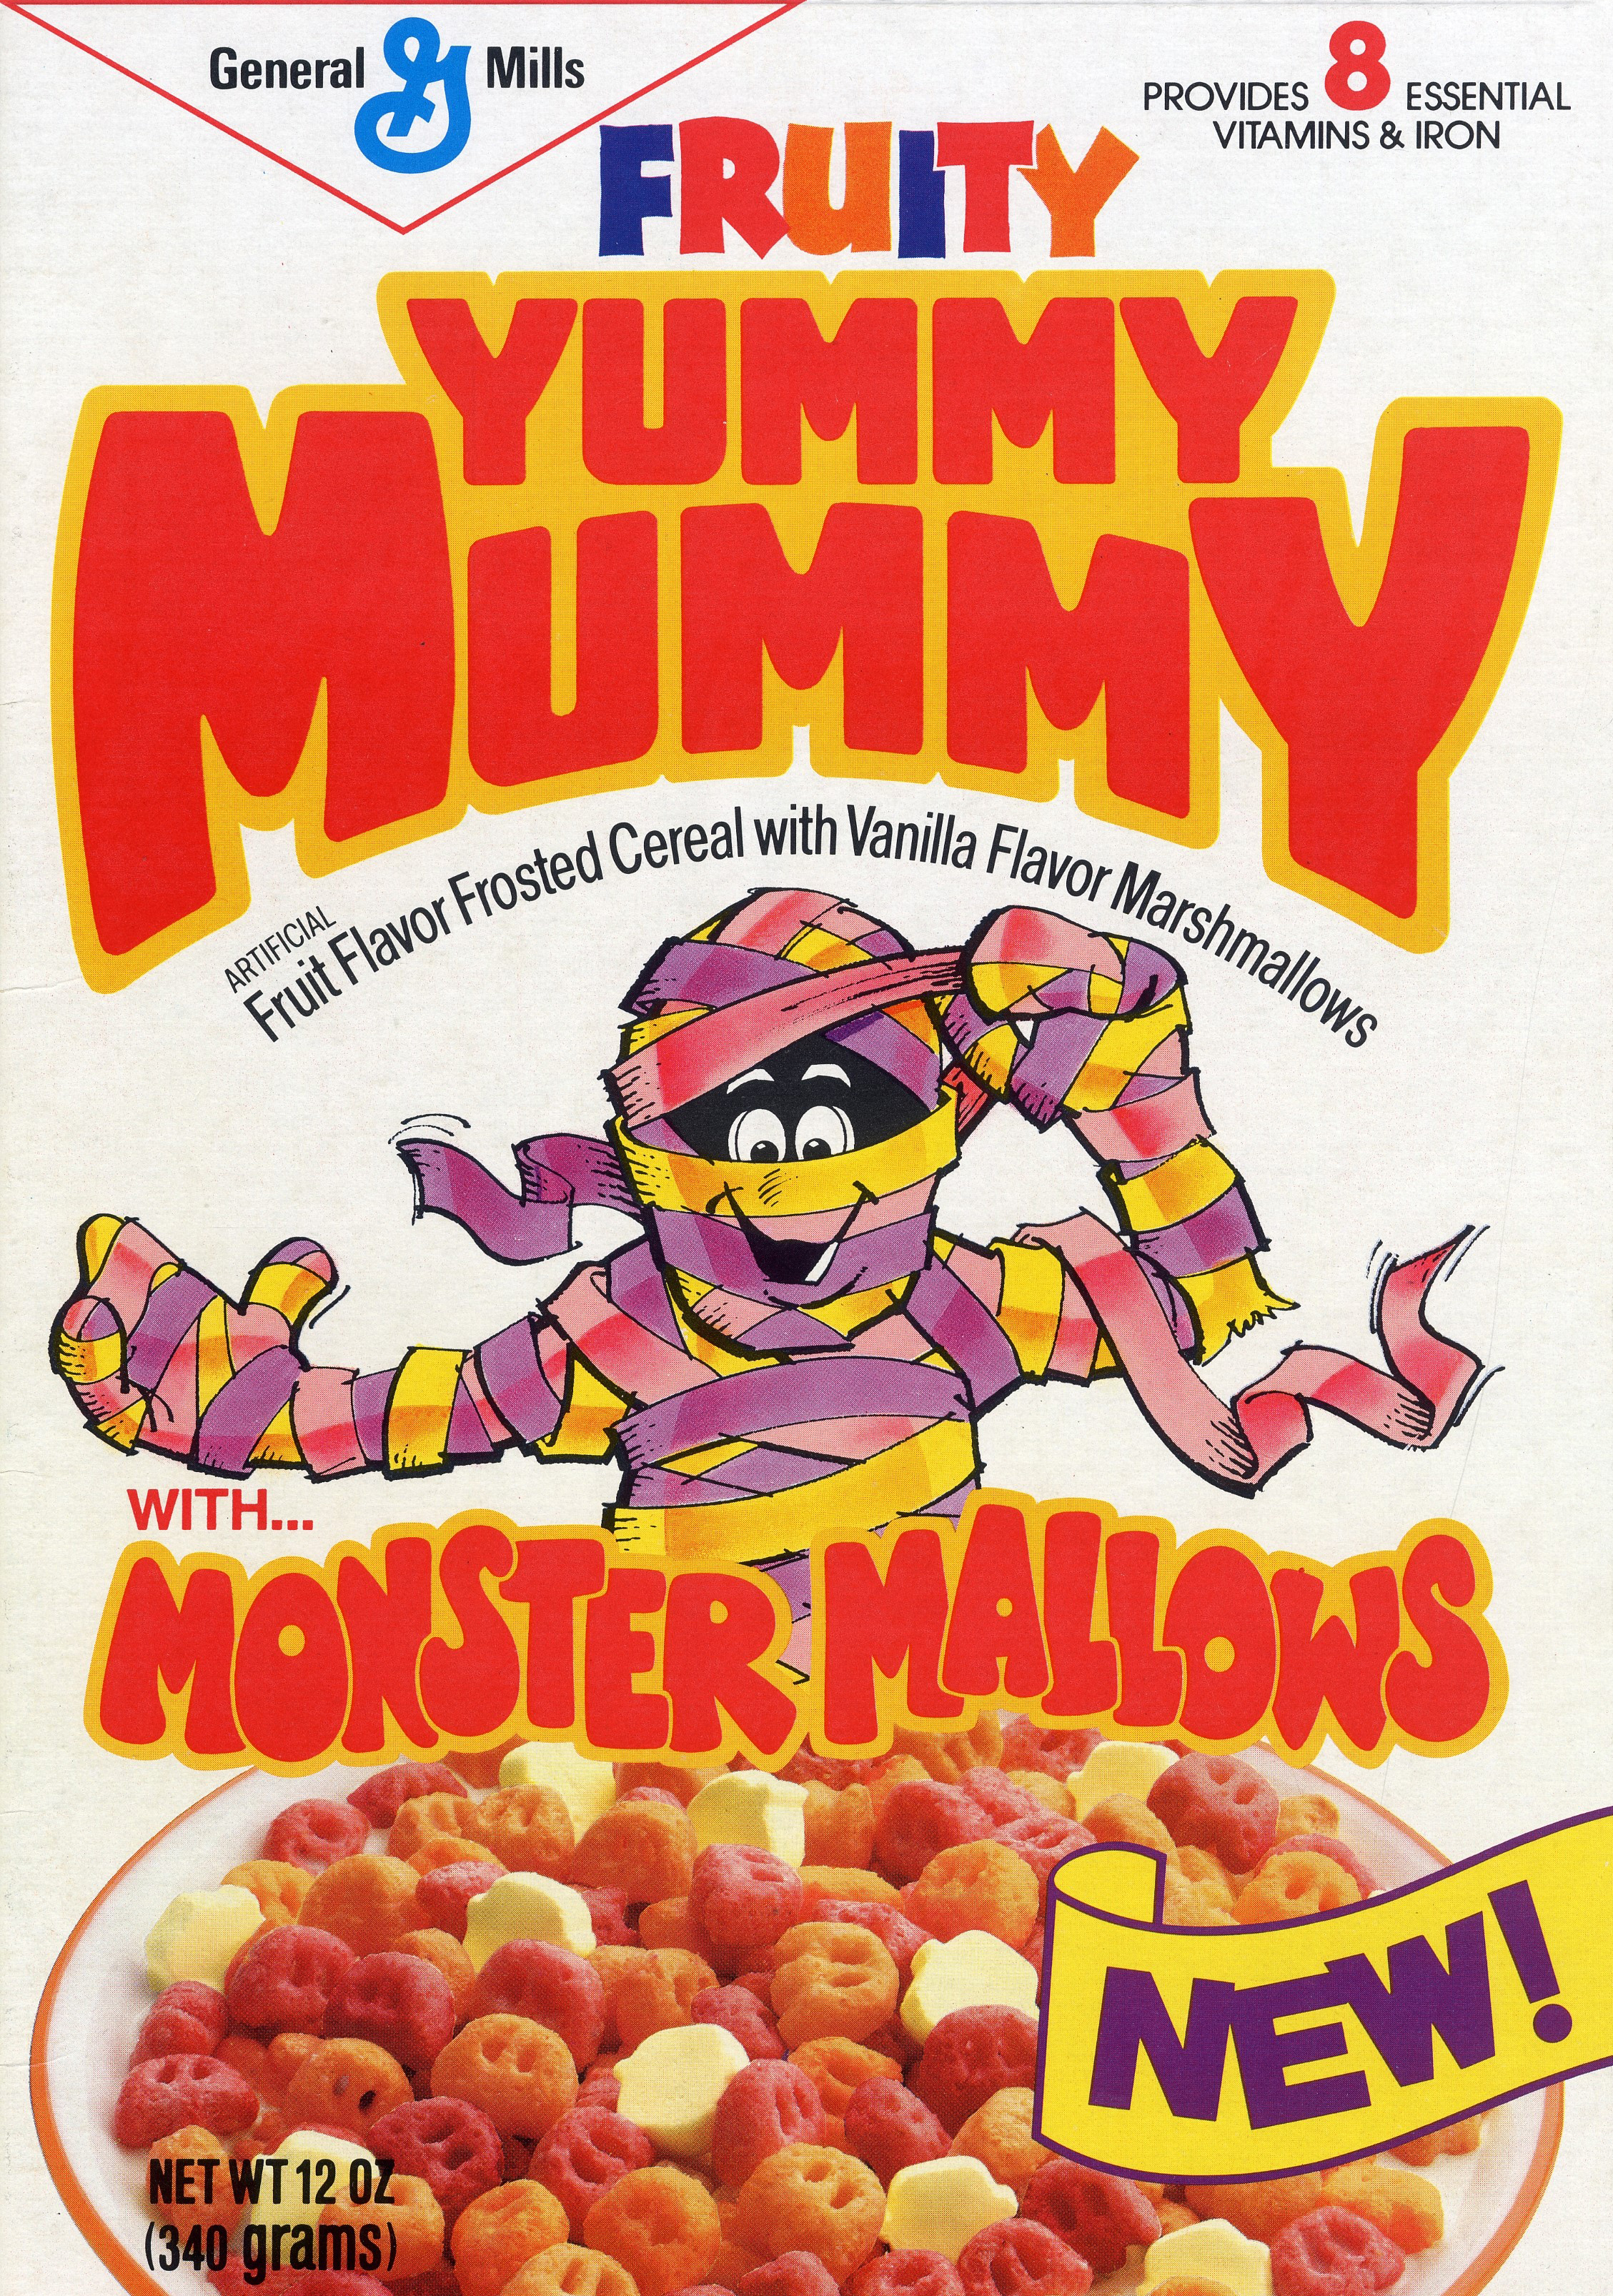 Yummy Mummy 1988 cereal box